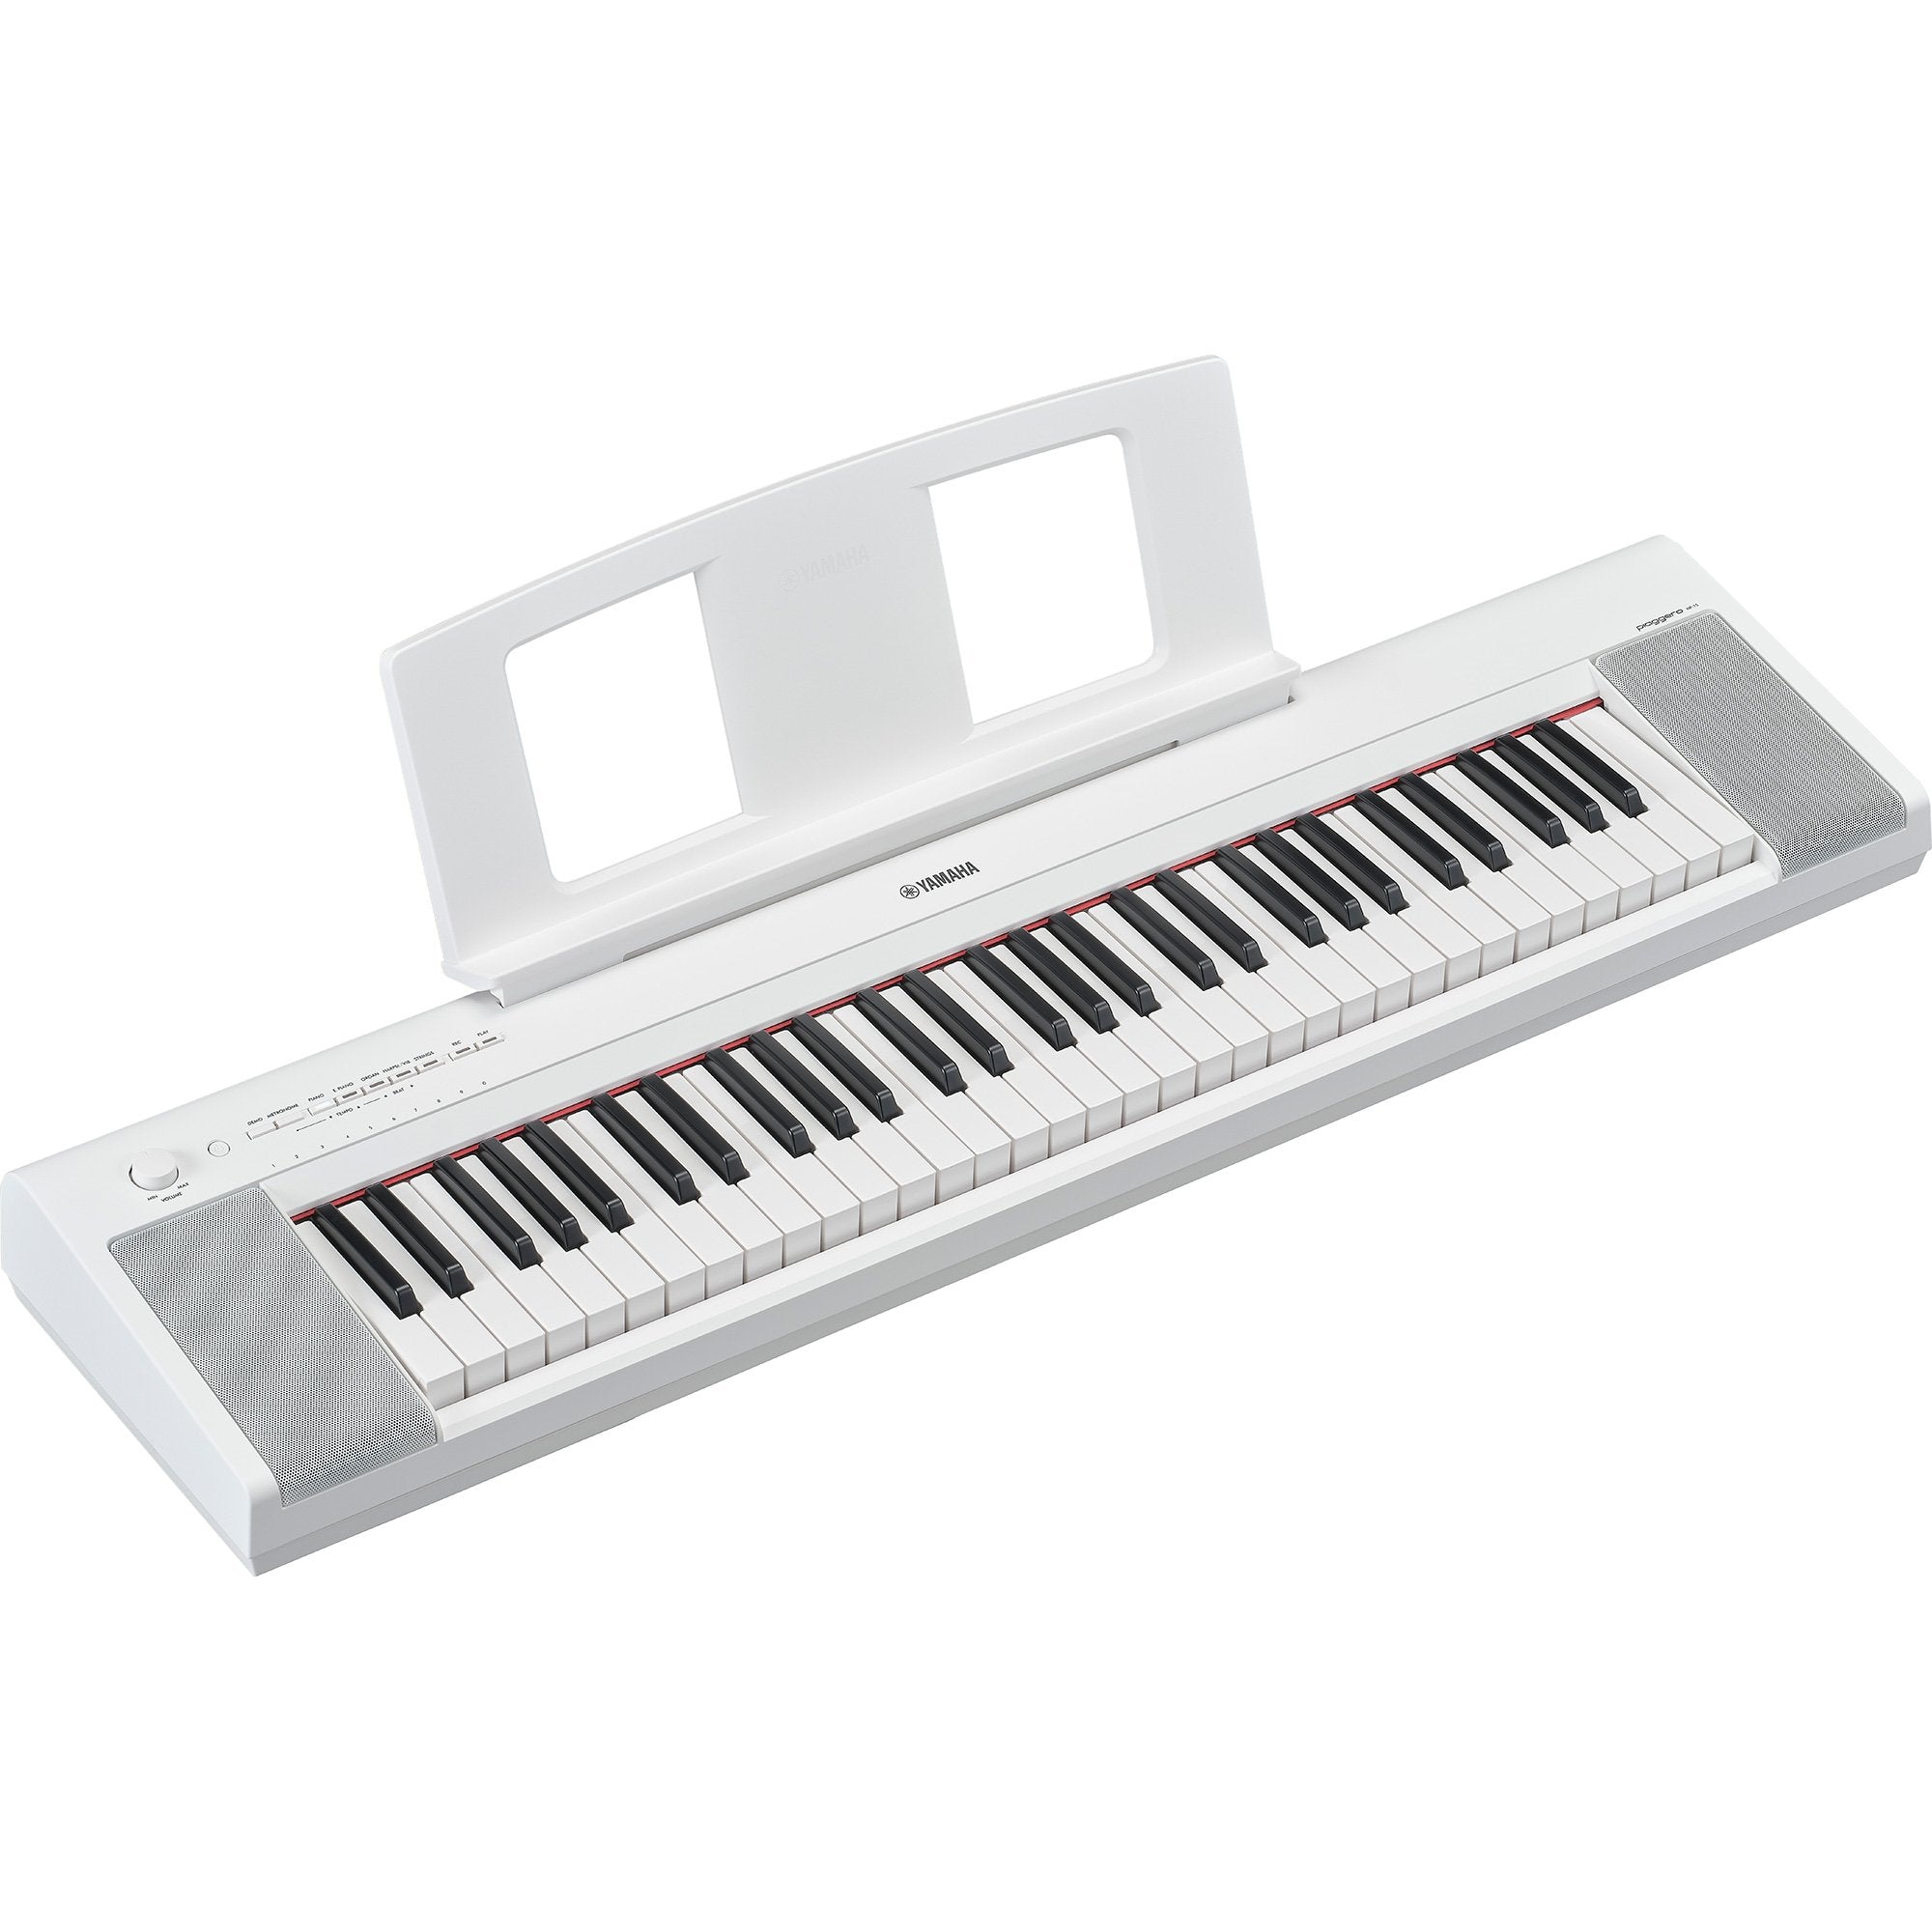 Yamaha Piaggero NP-15 數碼鍵琴 (連電源變壓器)